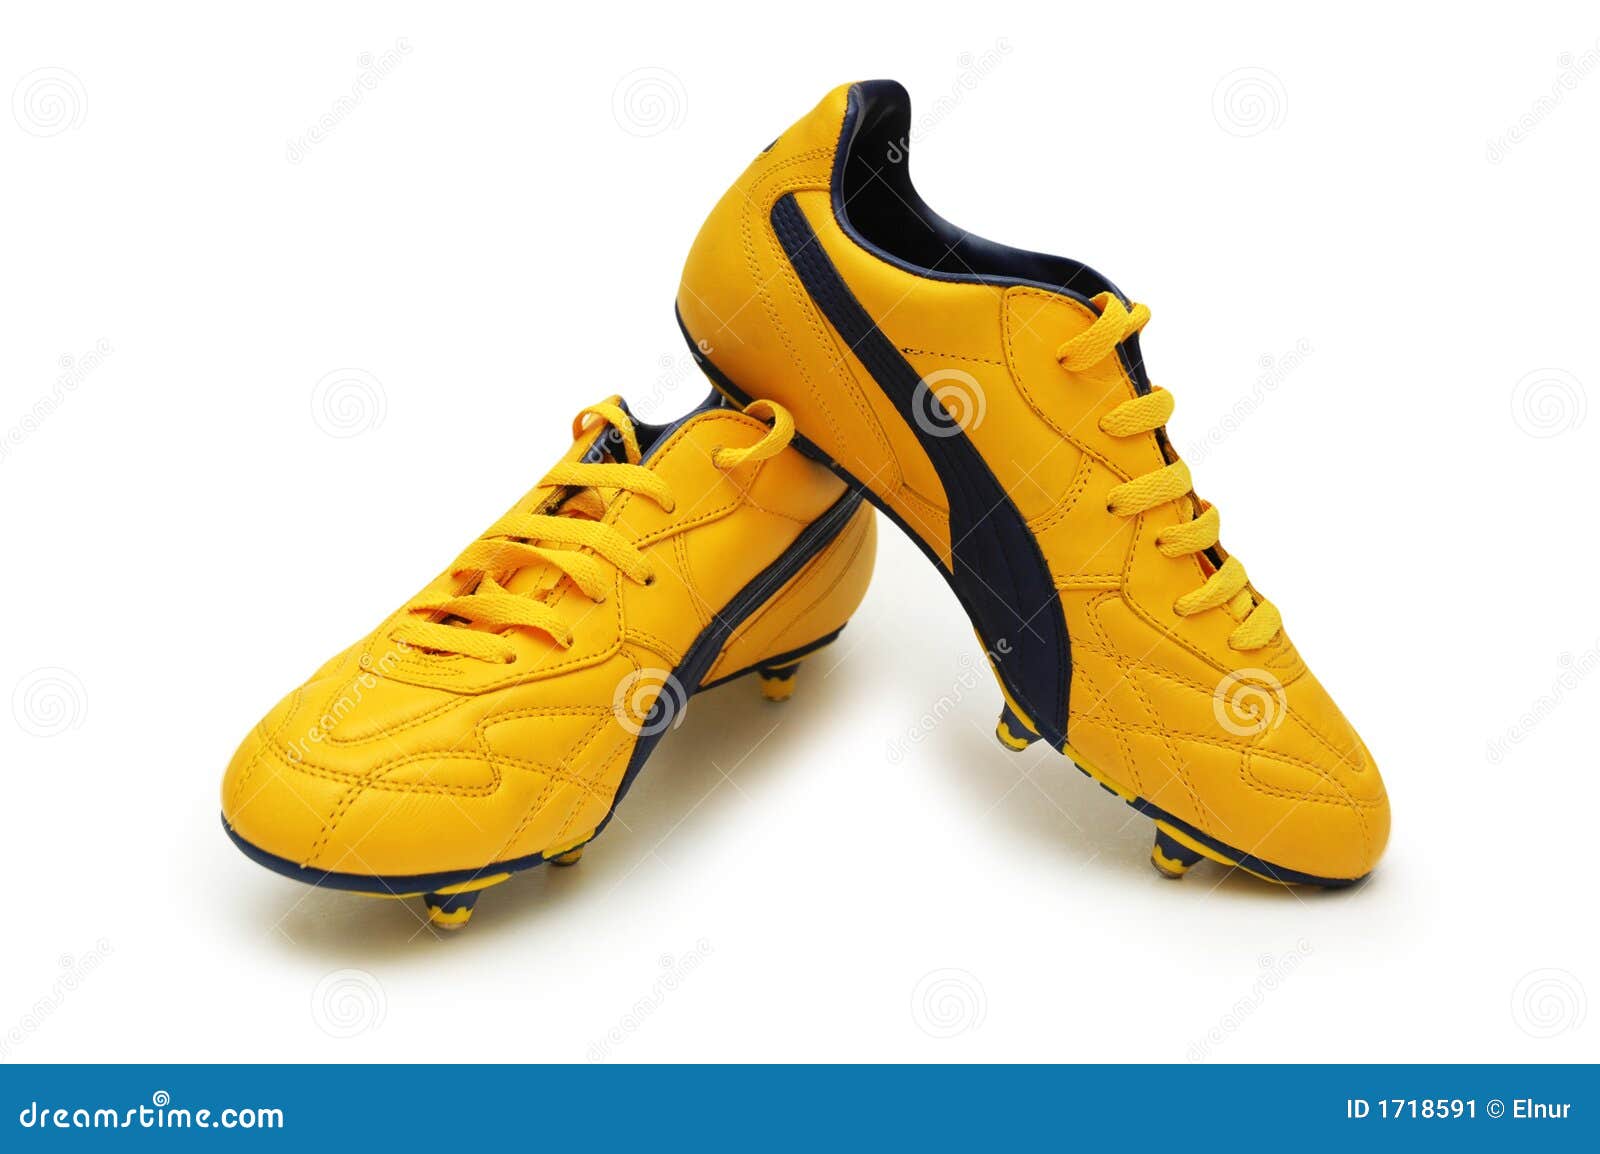 football boots clipart - photo #30